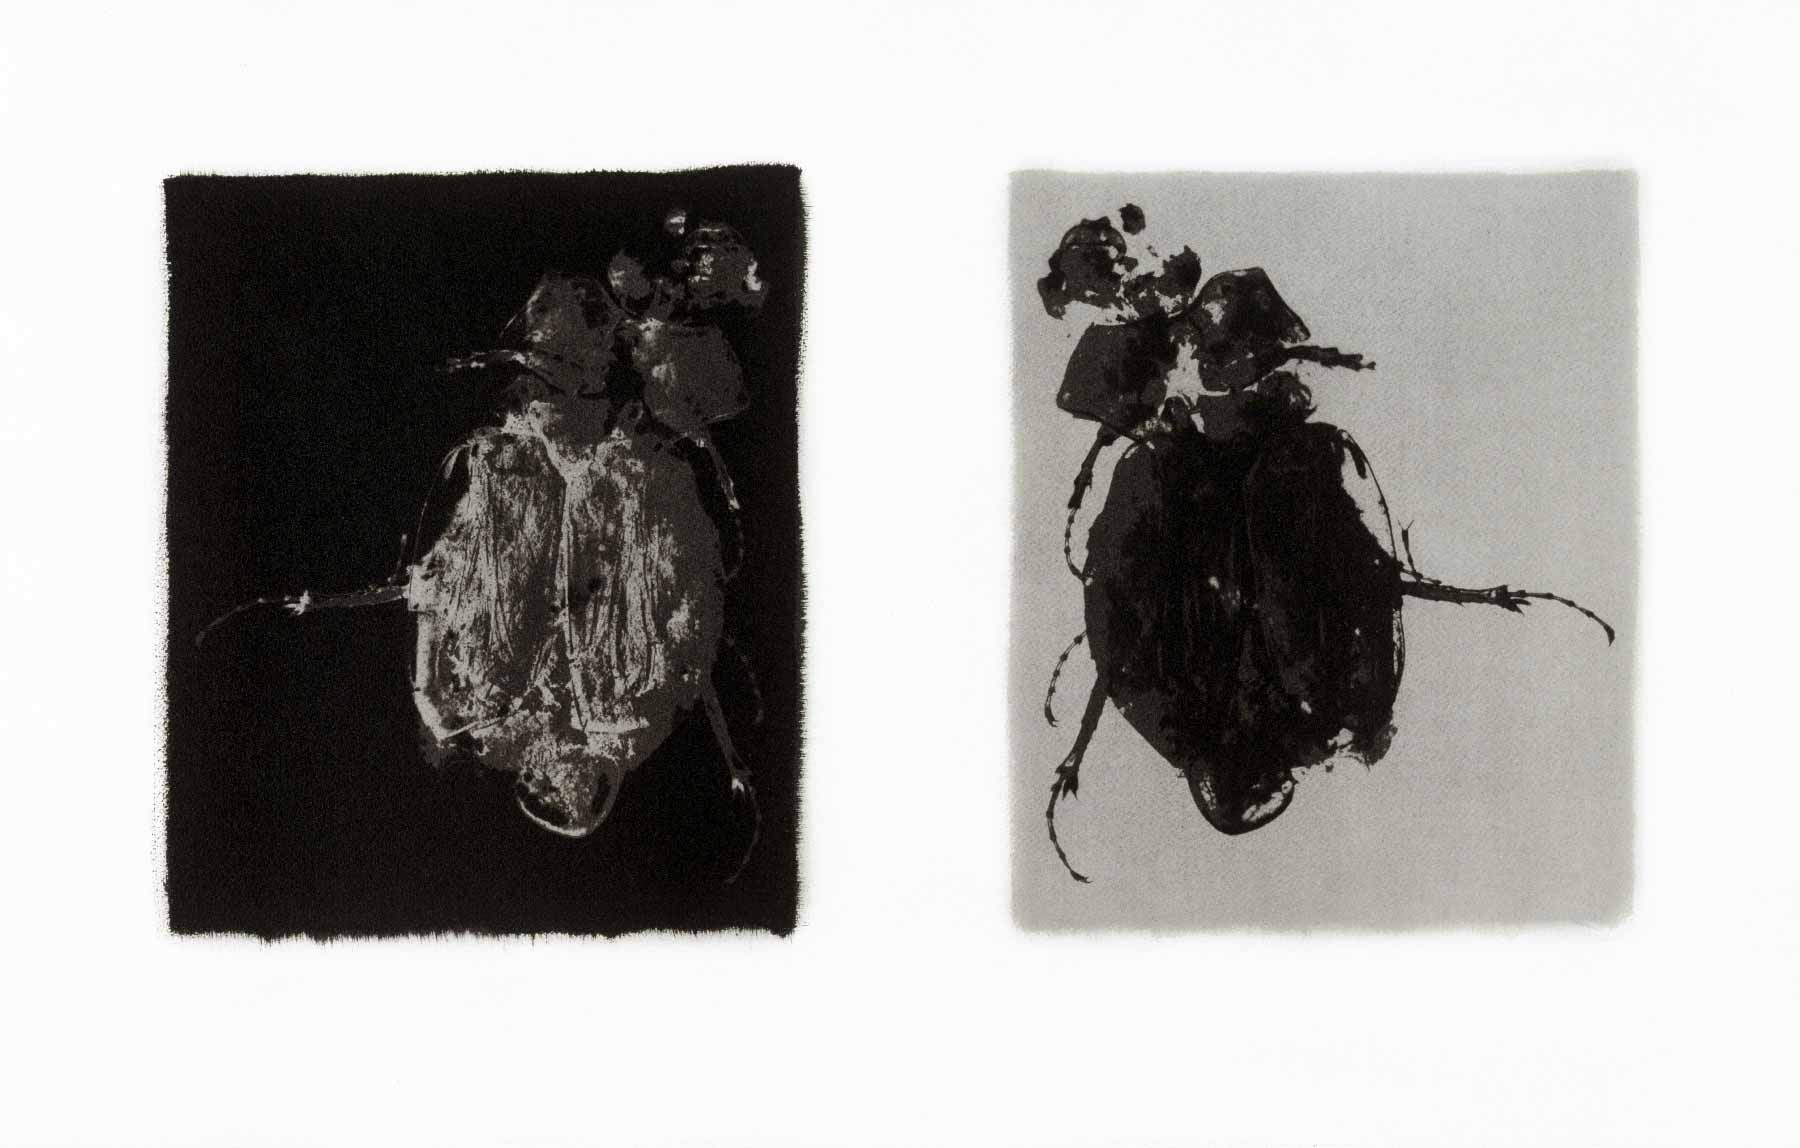 Gum bichromate diptych - Beetle 1997